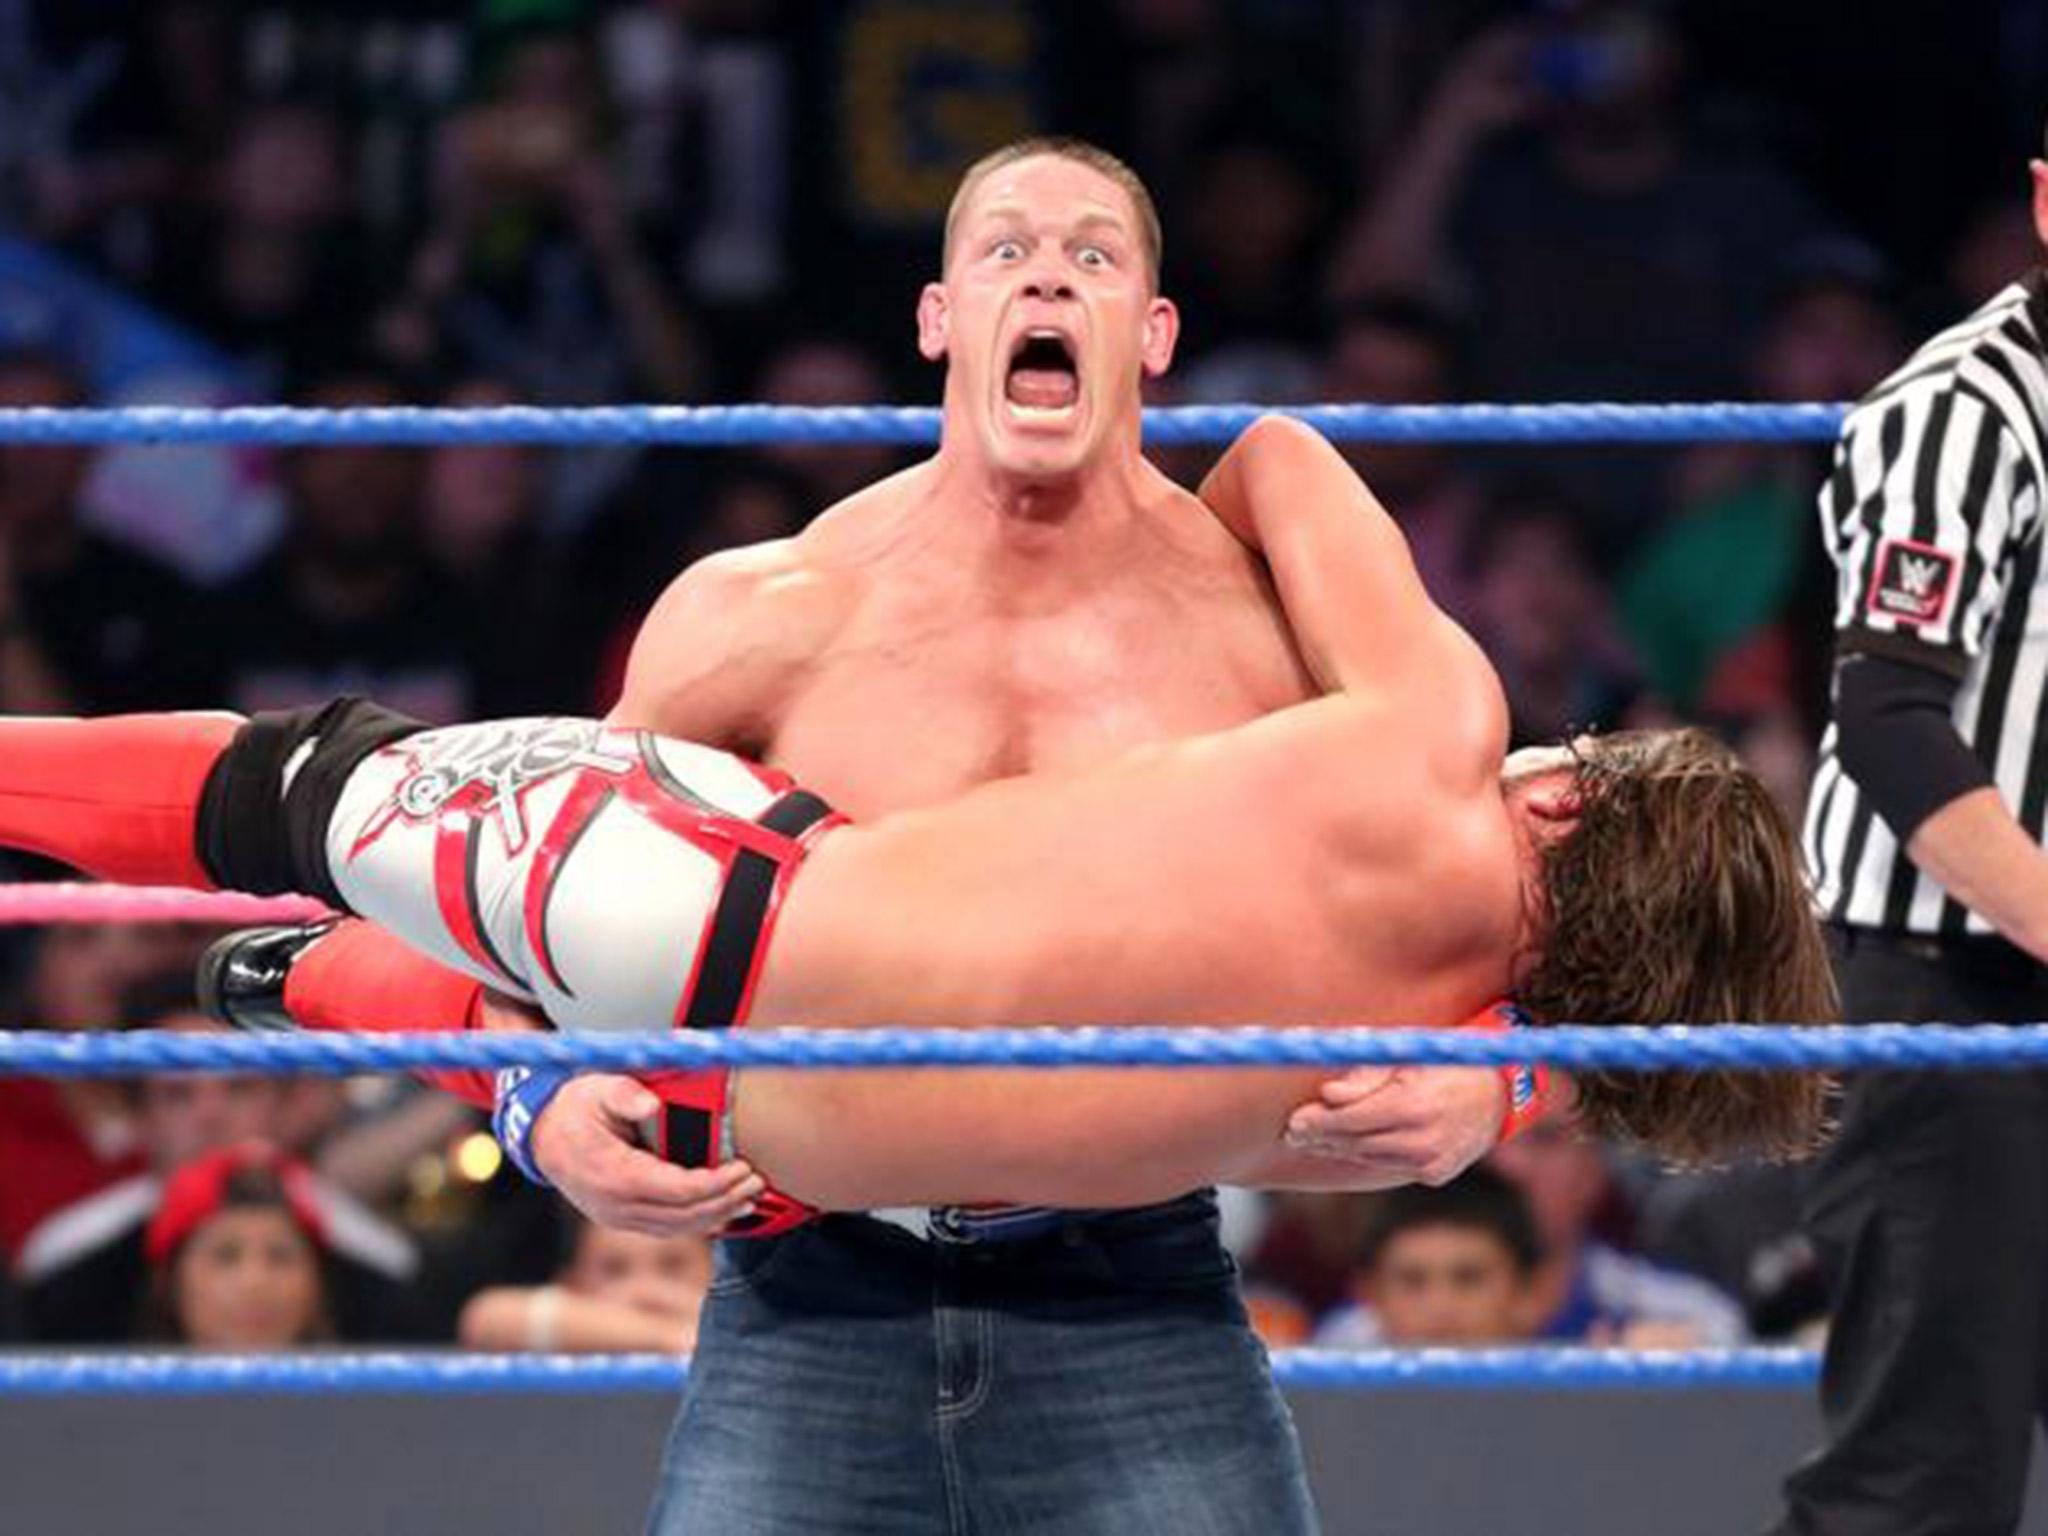 &#13;
Cena hoists Styles up for an Attitude Adjustment &#13;